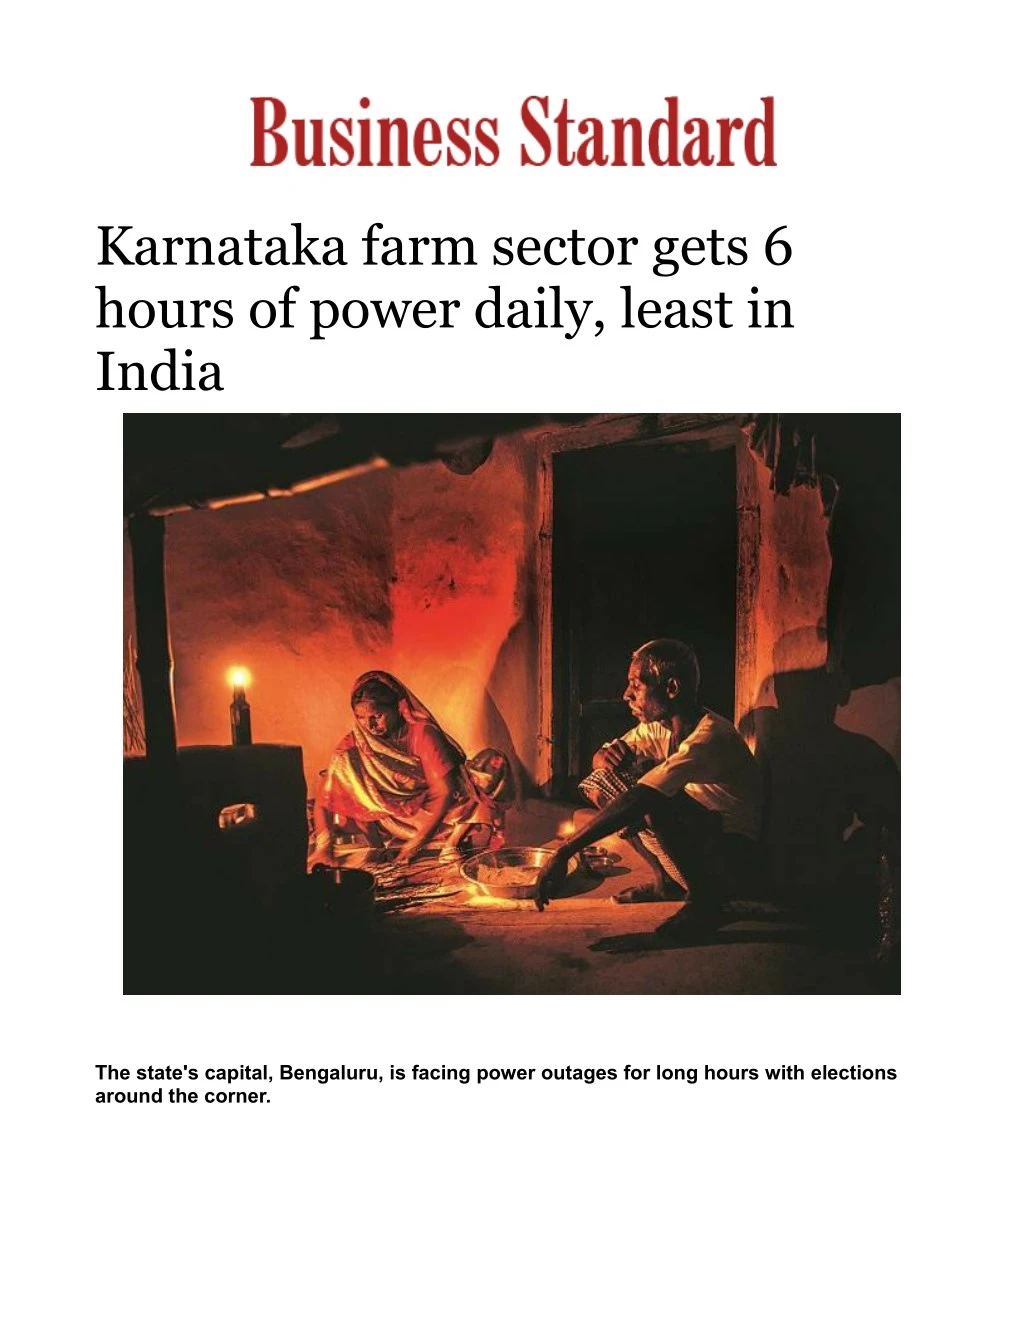 karnataka farm sector gets 6 hours of power daily